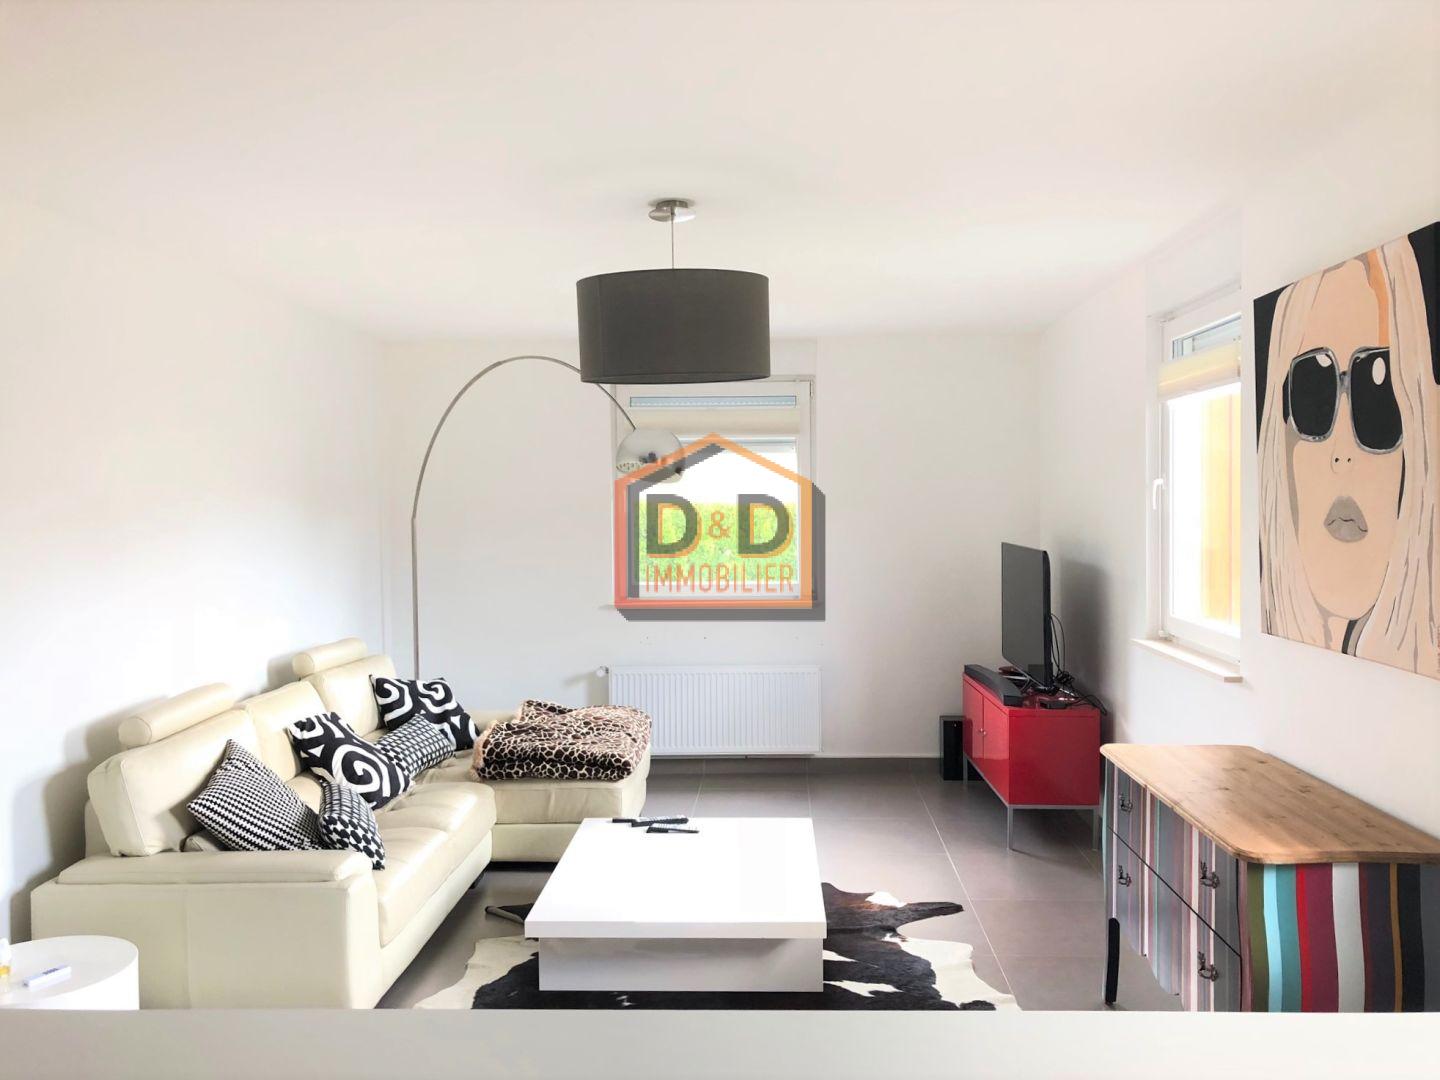 Appartement à Luxembourg-Belair, 38 m², 1 salle de bain, 1 600 €/mois